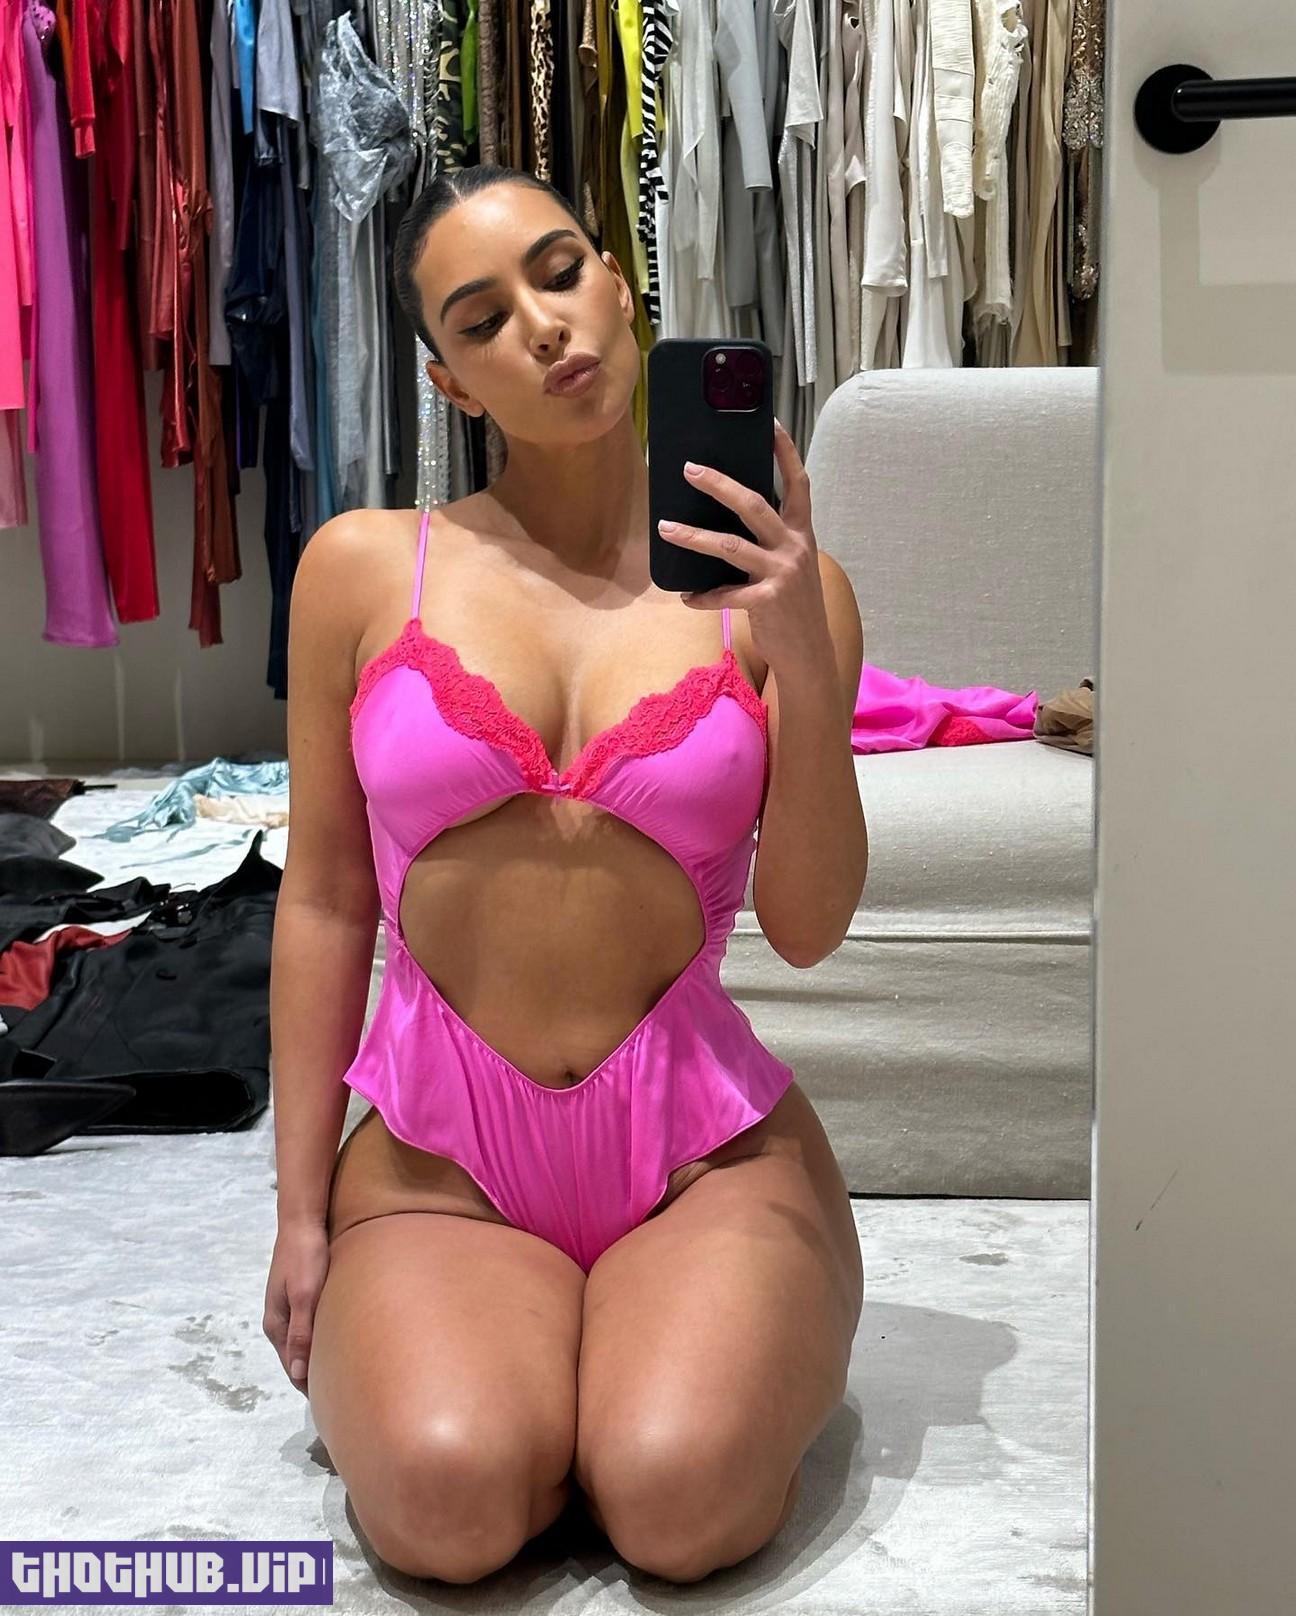 Kim Kardashian Sexy In Pink Lingerie 3 Photos